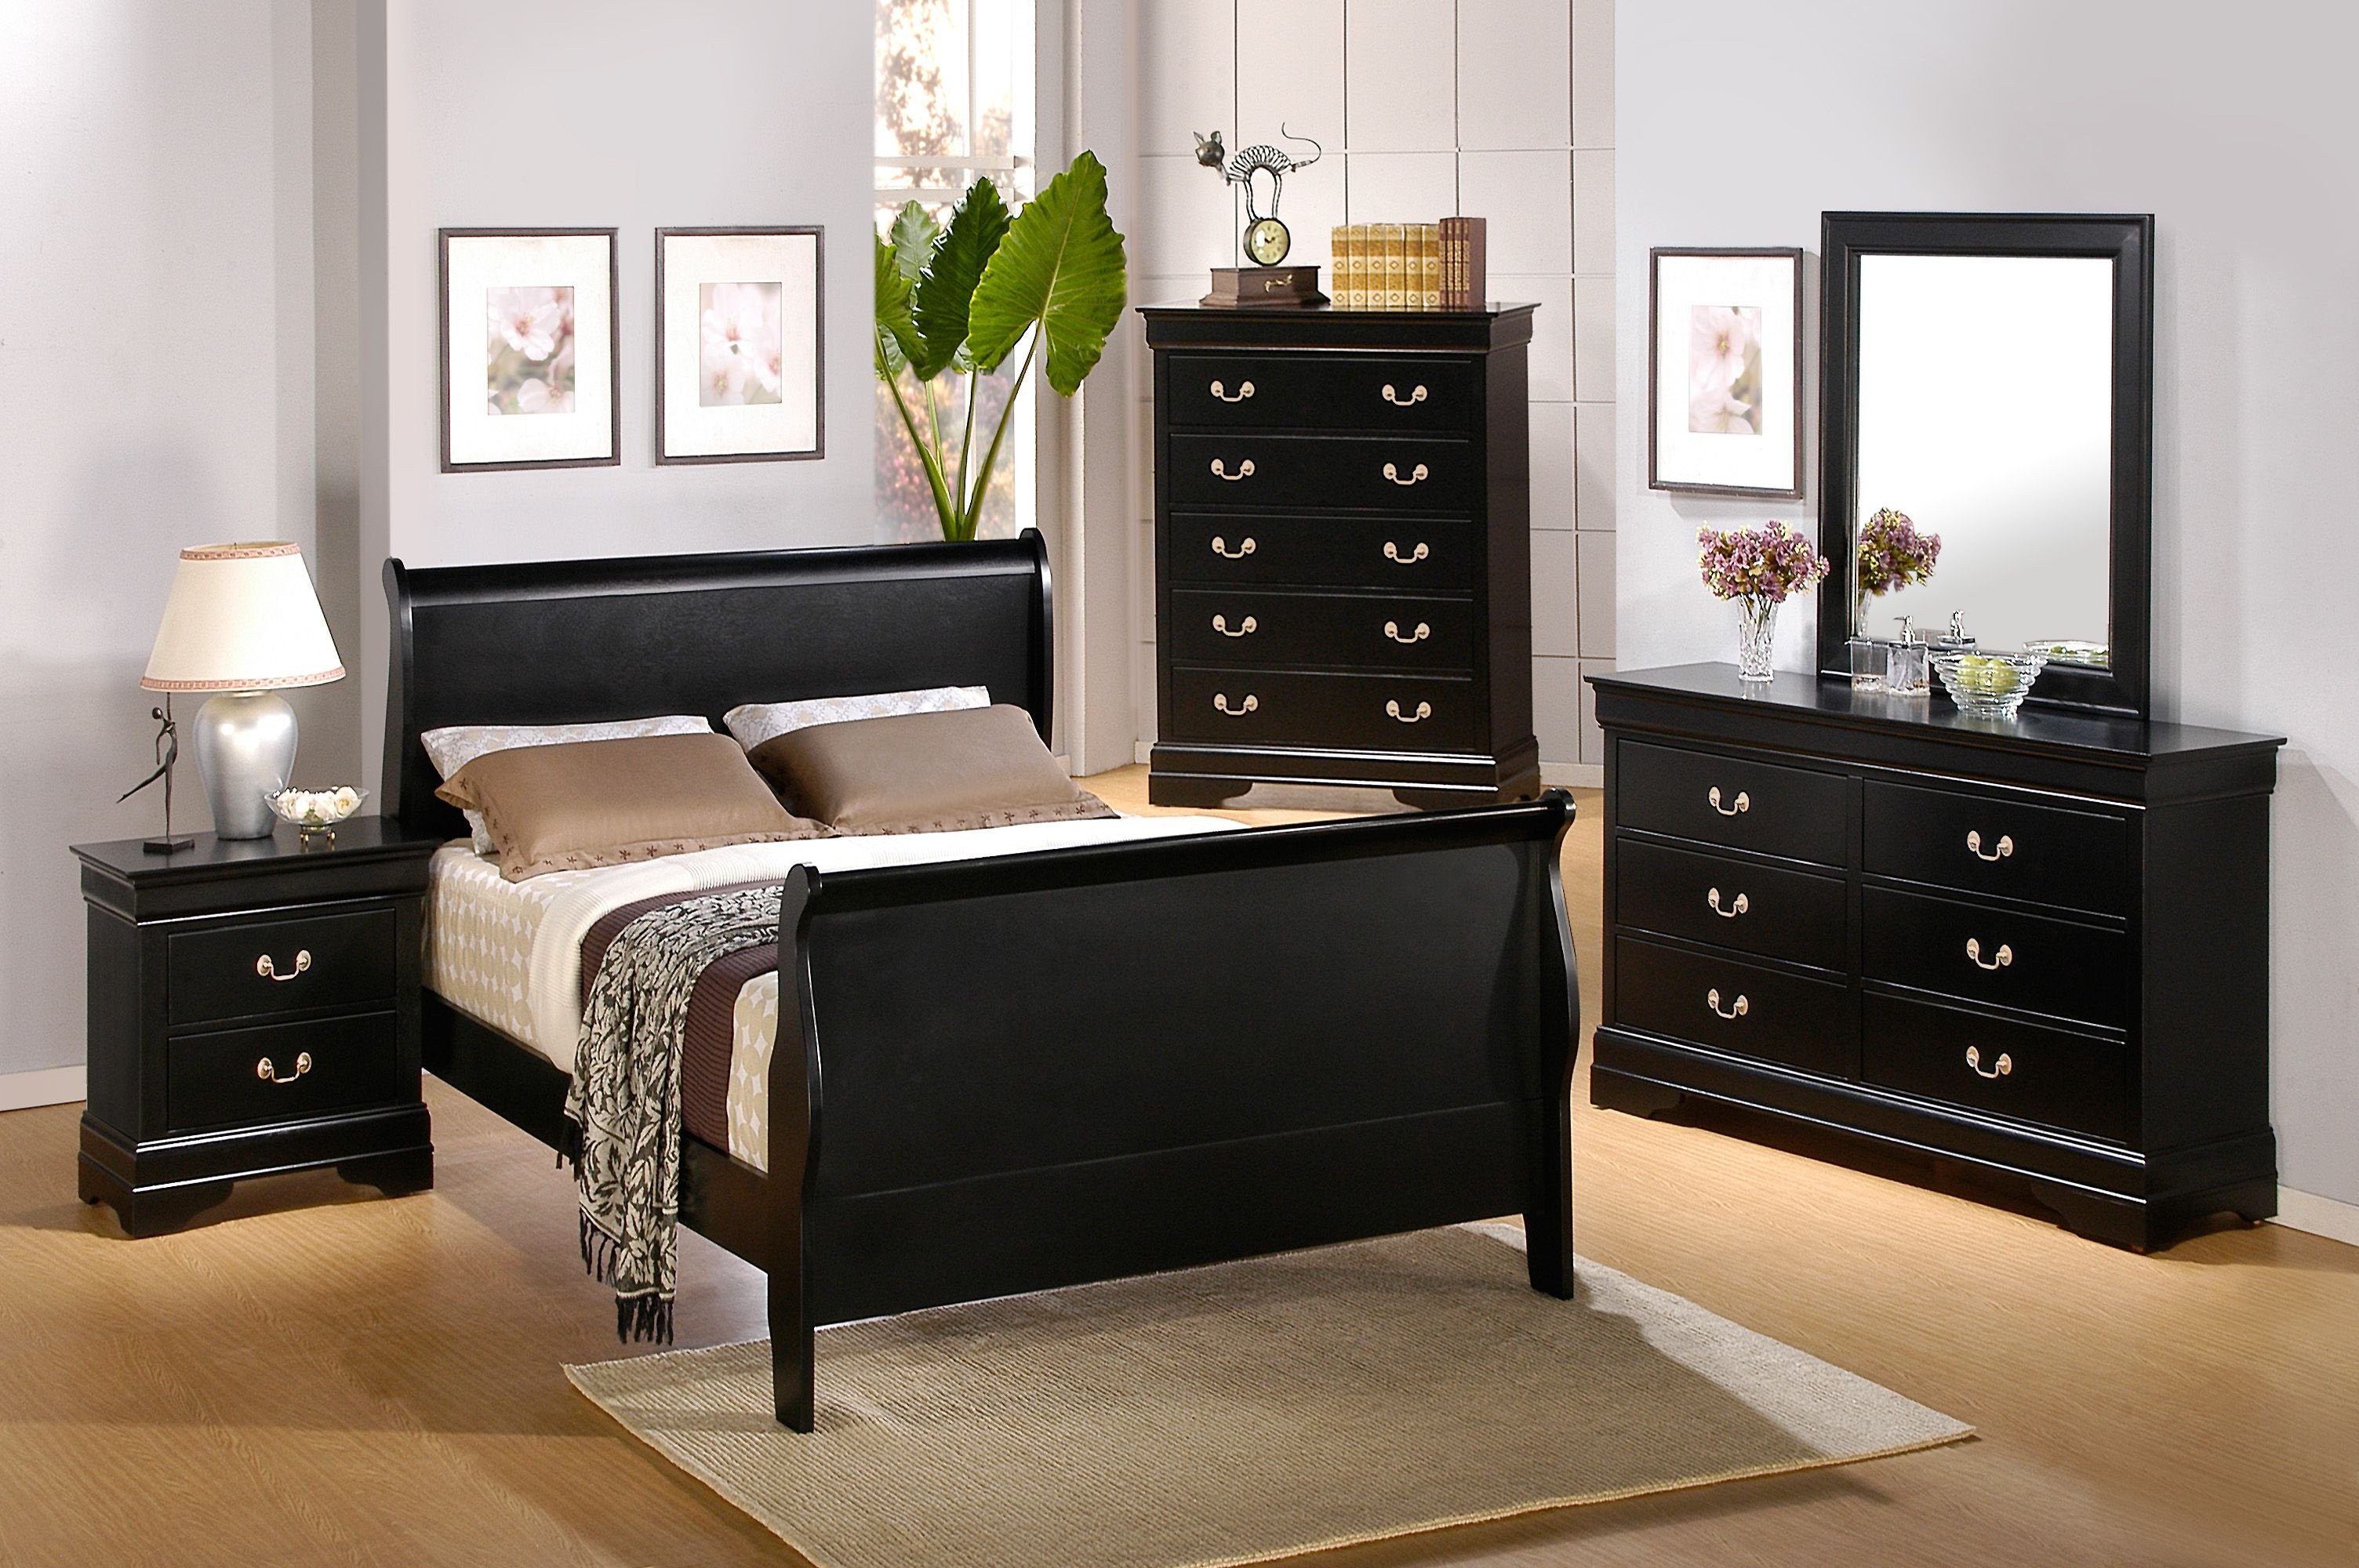 Mirrored Headboard Bedroom Set Fresh Bedroom Furniture Dressers Best for Homes